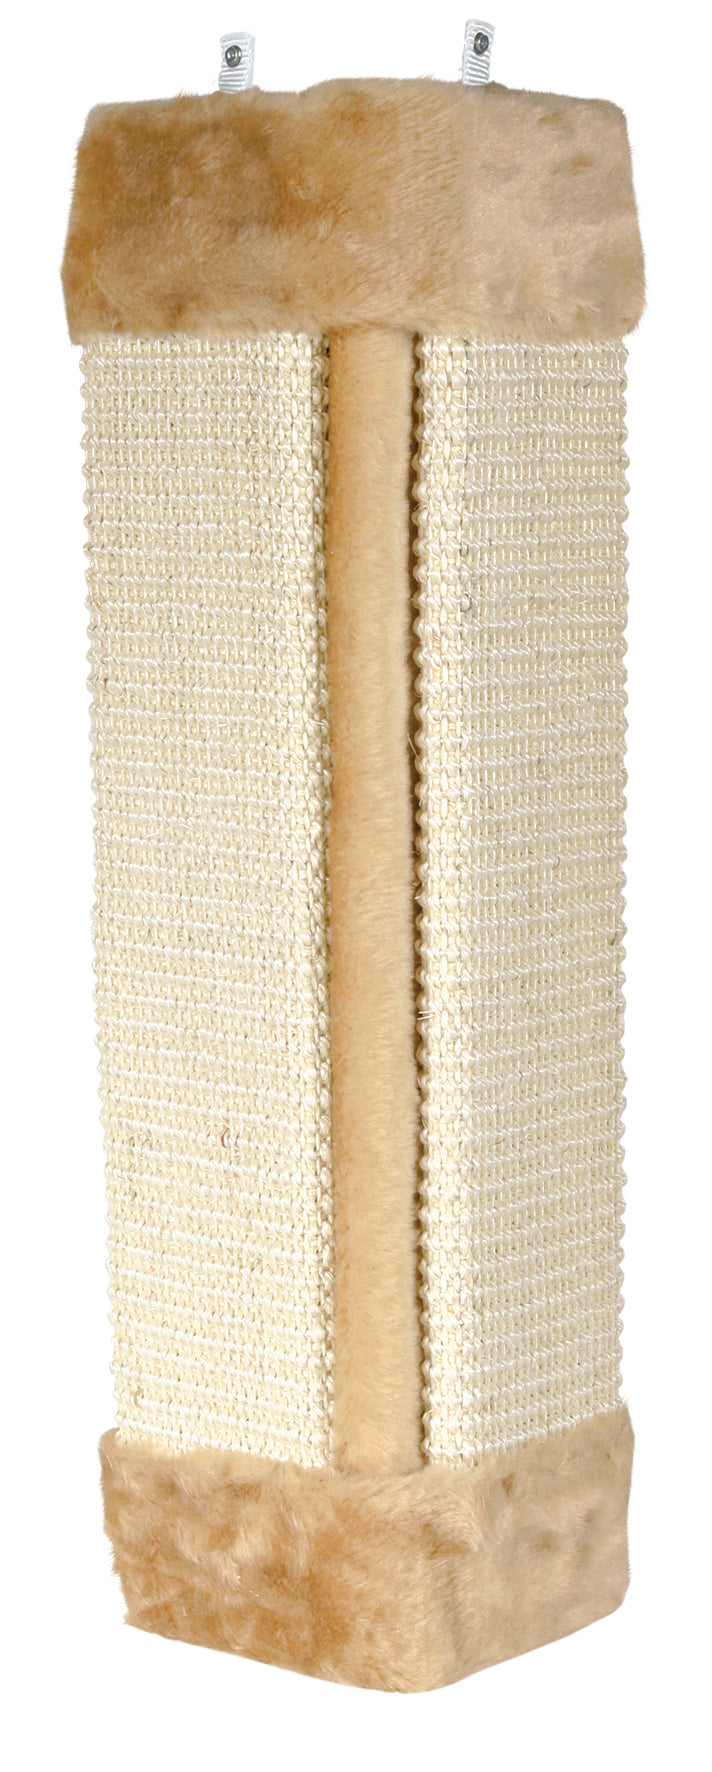 43191 Scratching board for corners, 23 x 49 cm, natural/beige